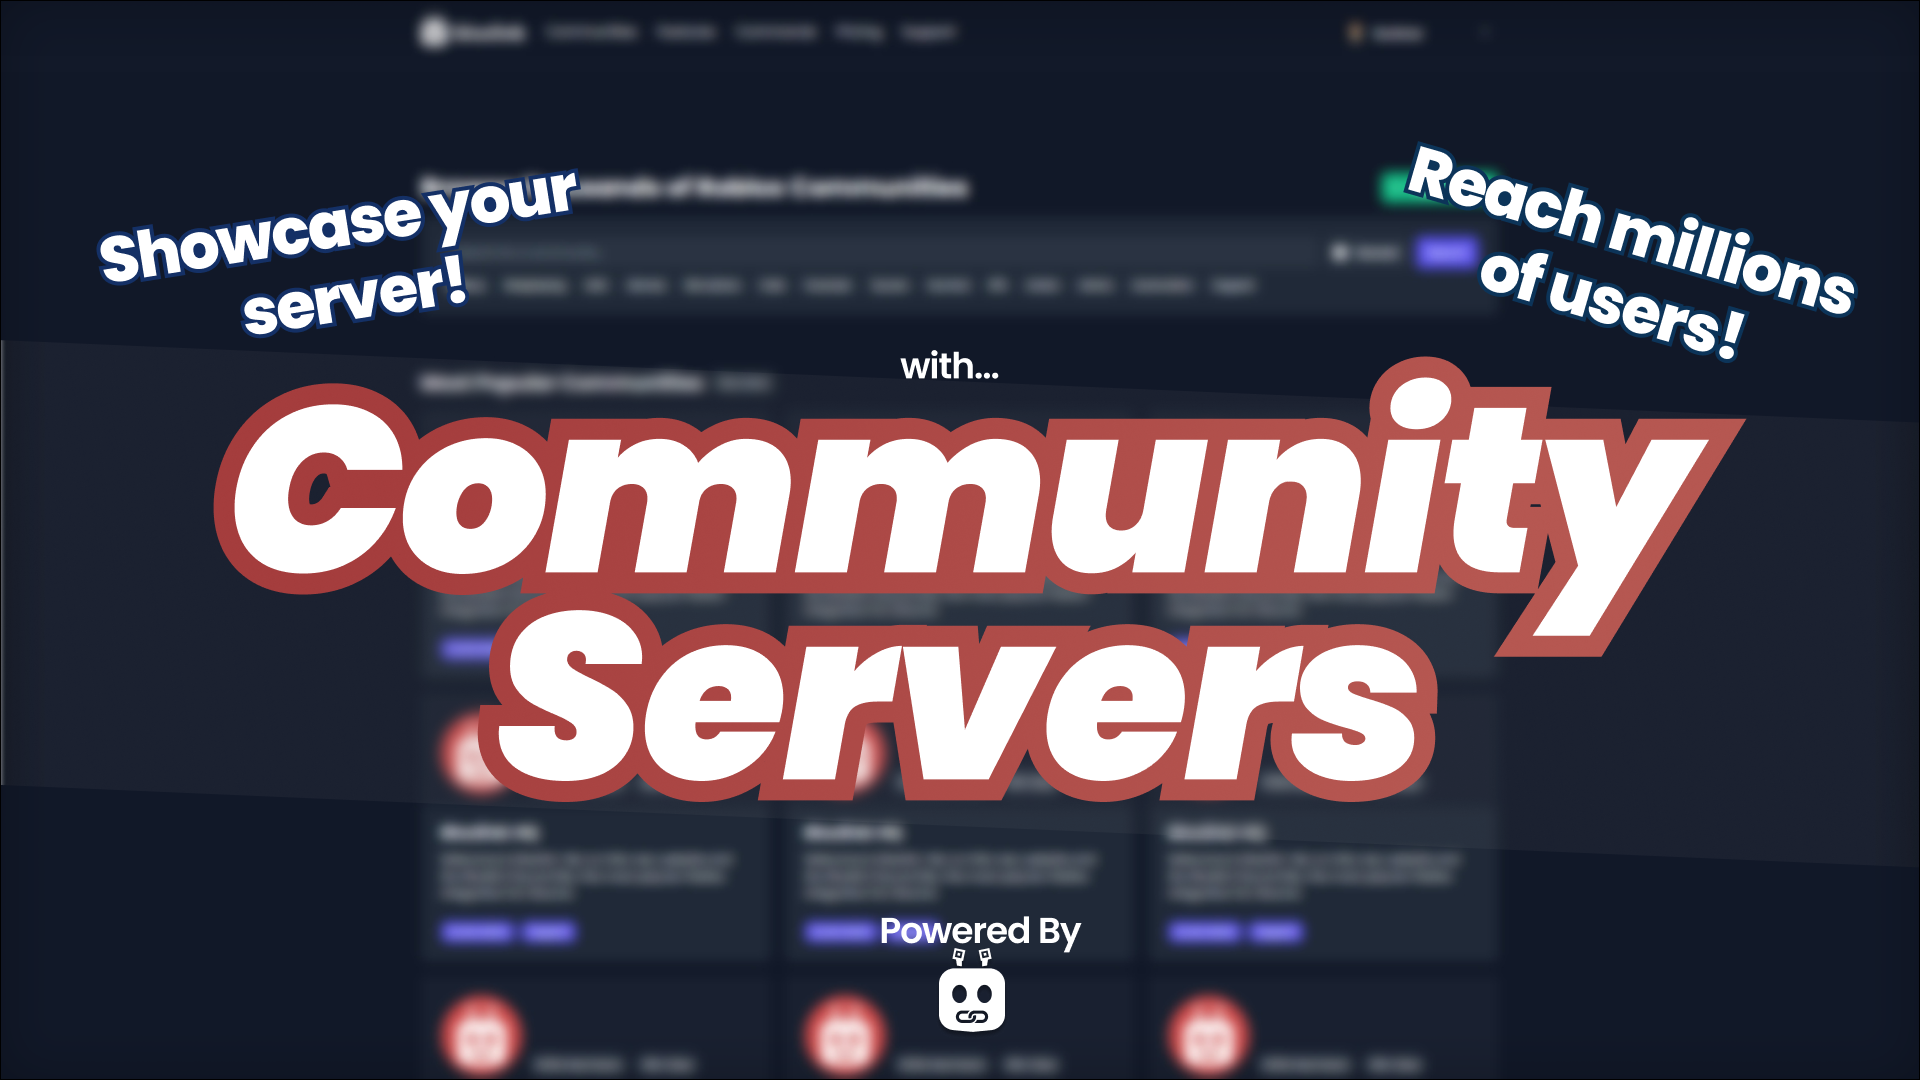 Roblox Studio Community - Discord Servers